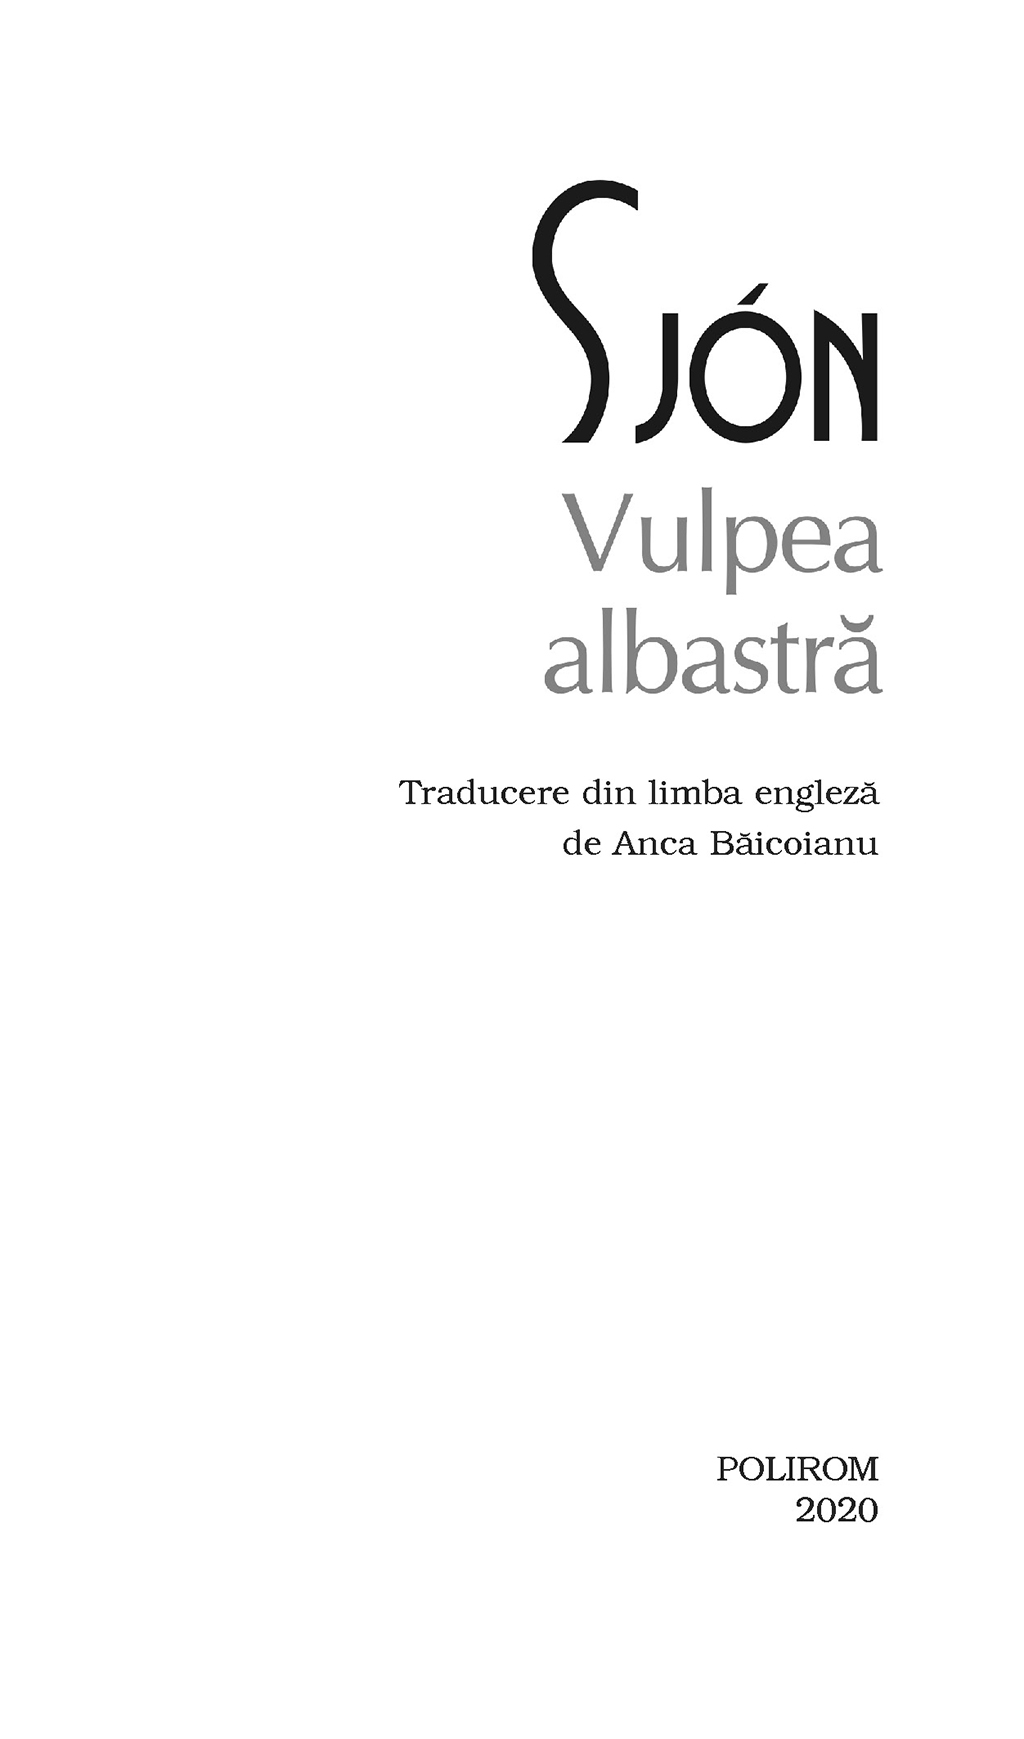 Vulpea albastra | Sjon - 3